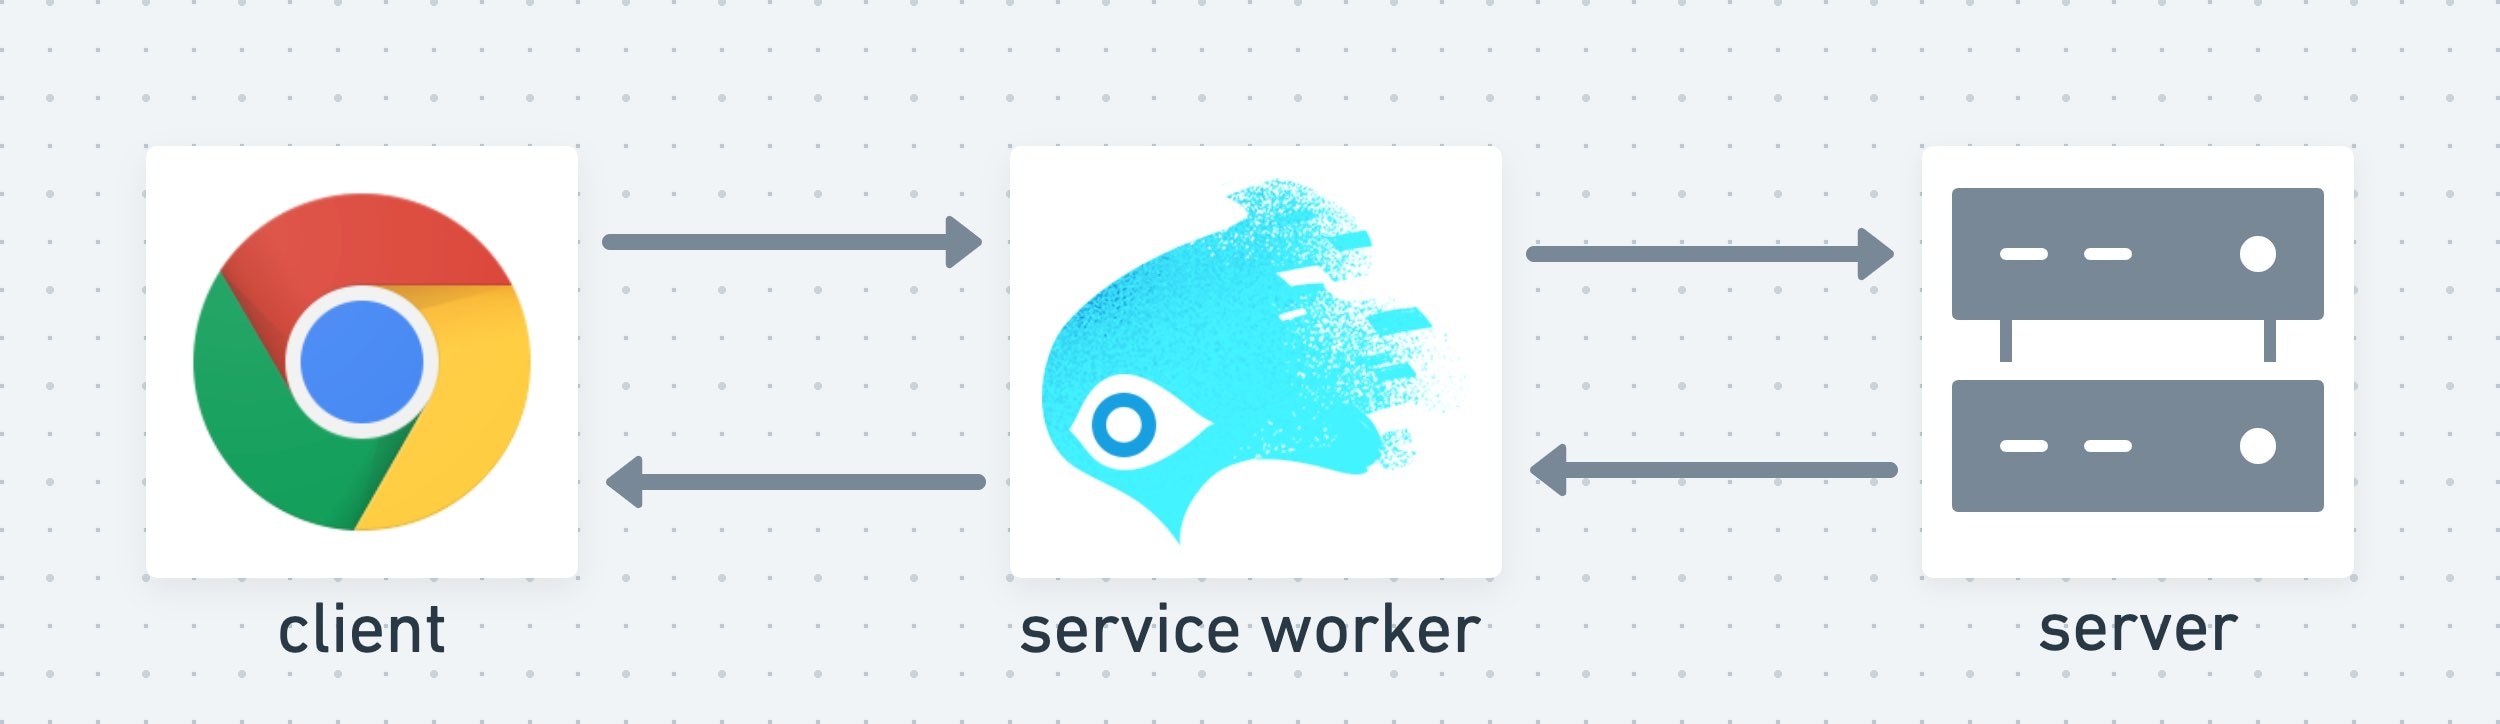 Service Worker 可做為用戶端和伺服器之間的中間層